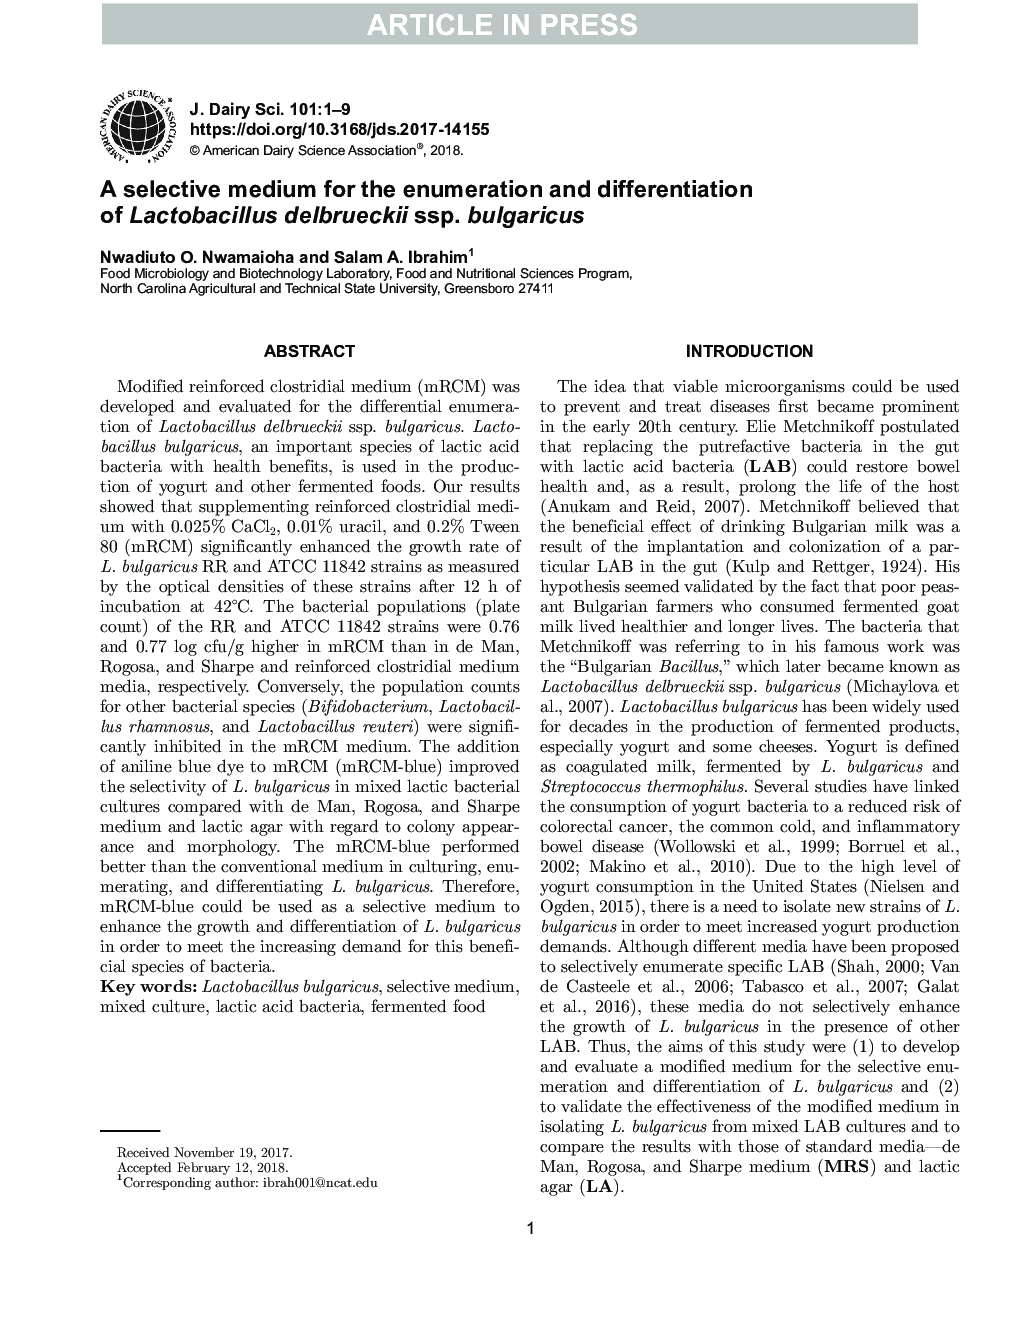 A selective medium for the enumeration and differentiation of Lactobacillus delbrueckii ssp. bulgaricus